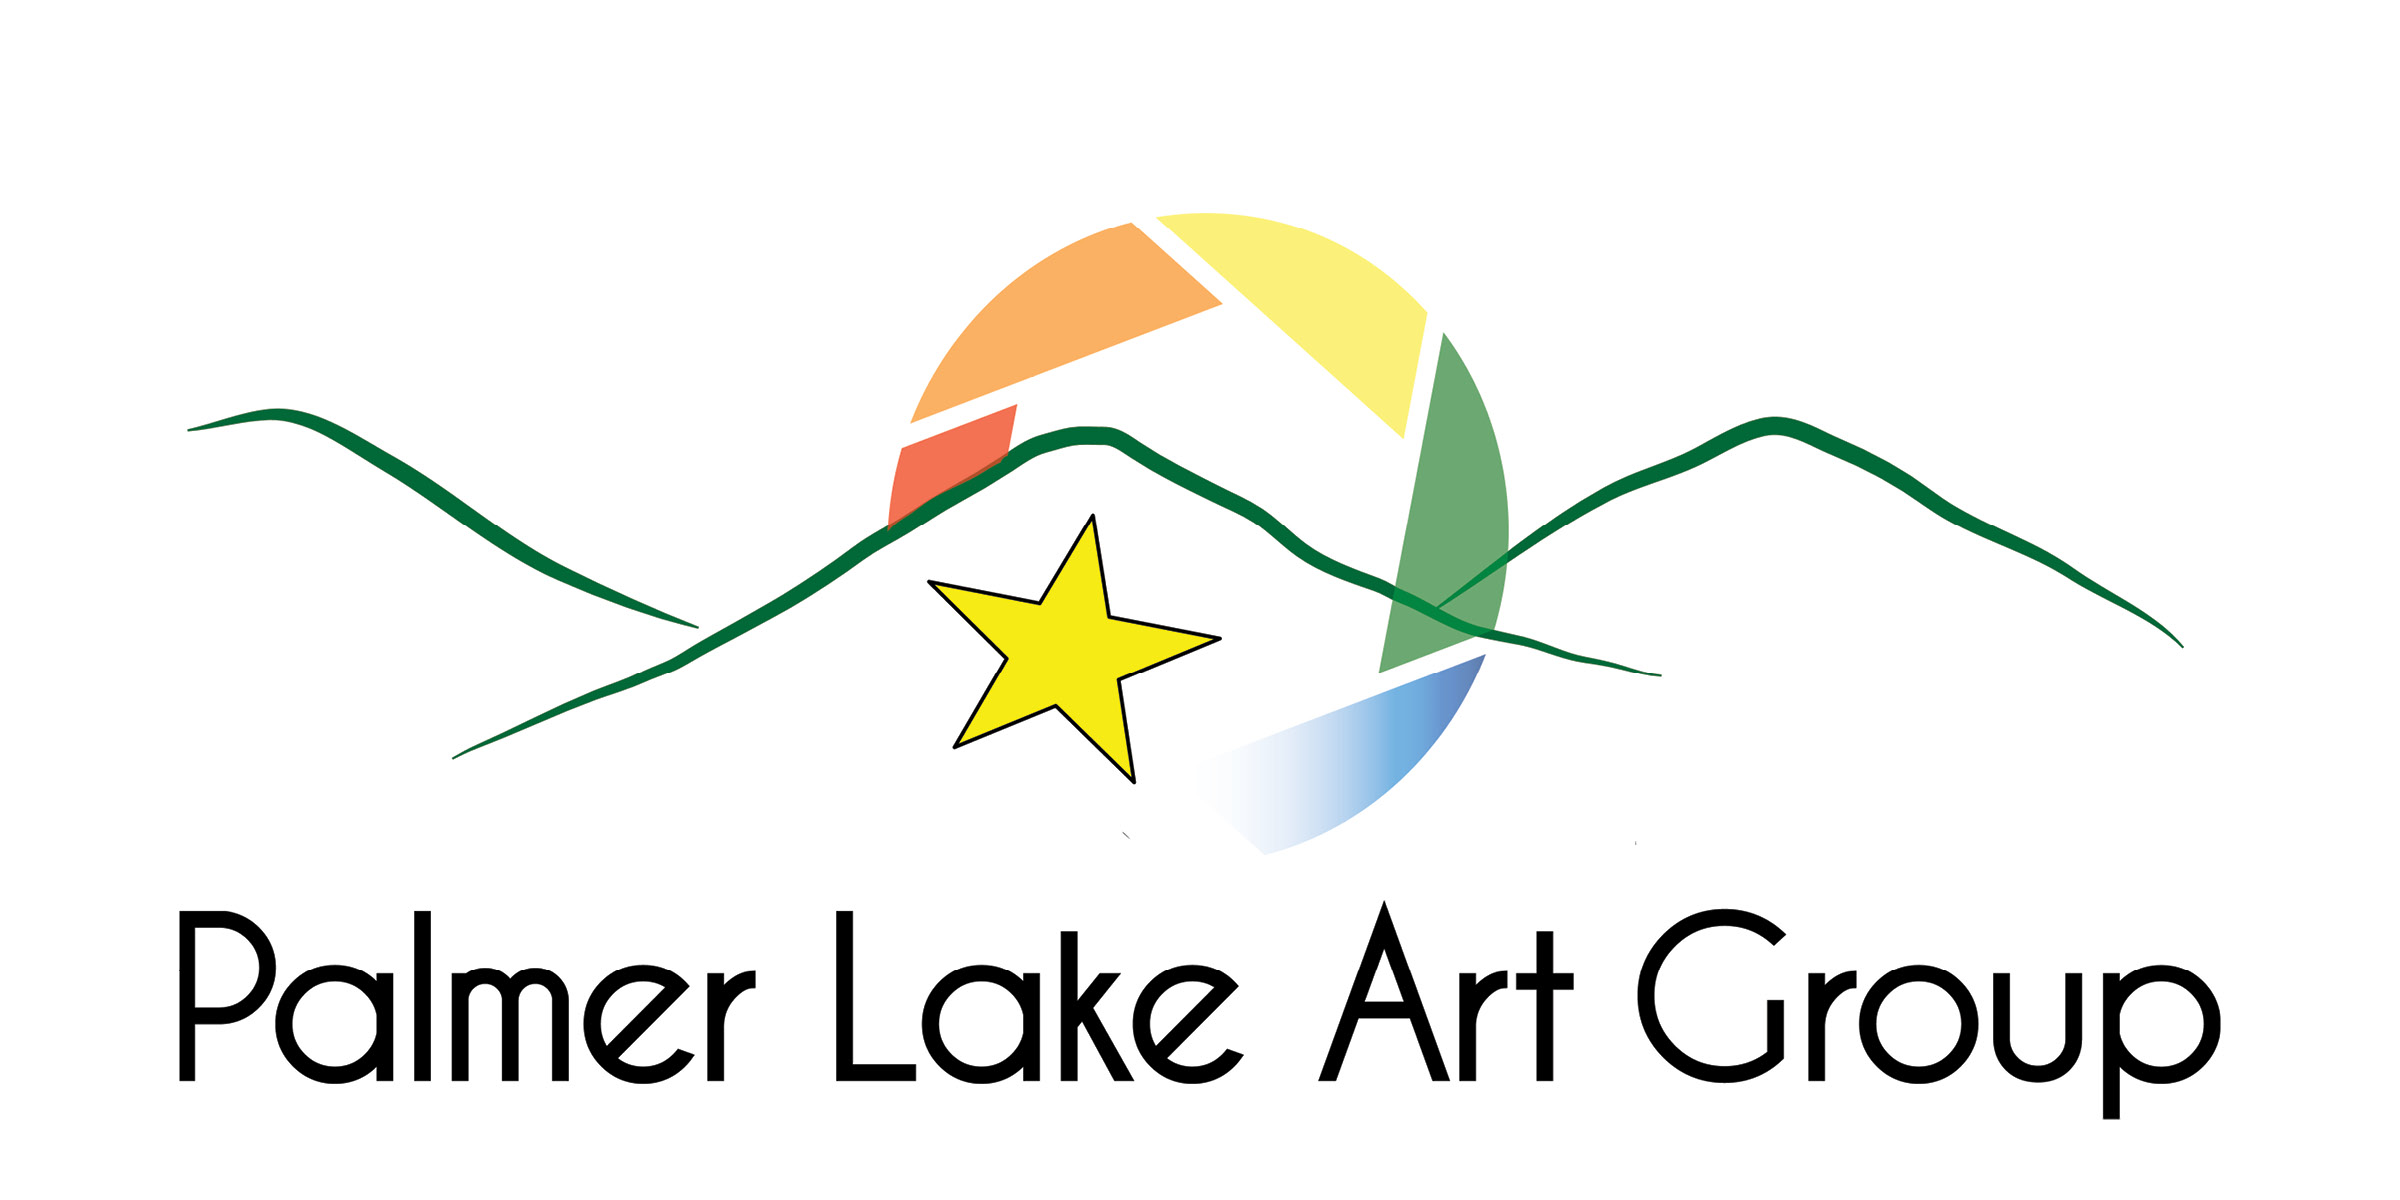 Palmer Lake Art Group